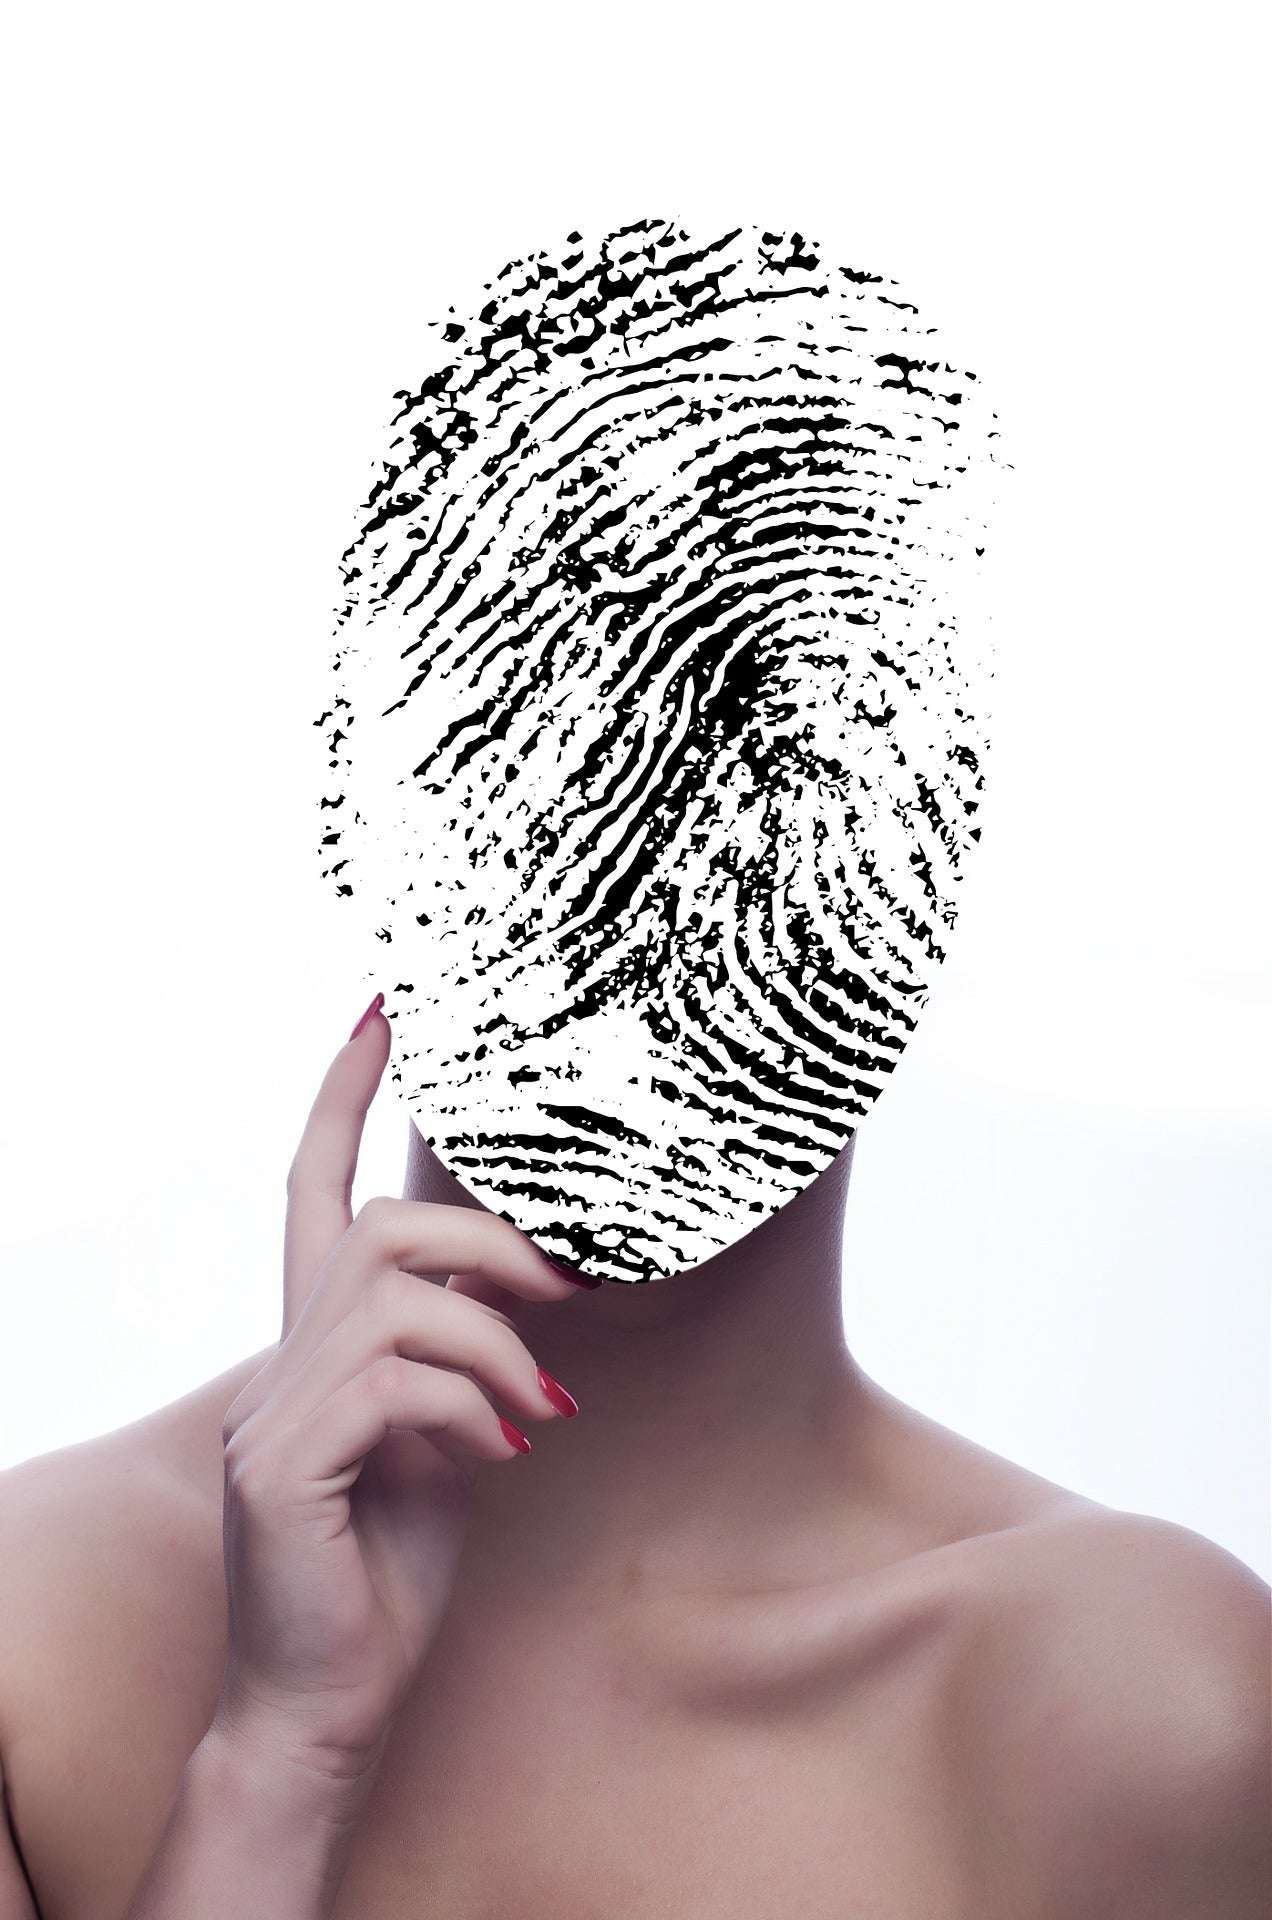 White Hats Breach Biometrics Database: 27.8 Million Records Exposed